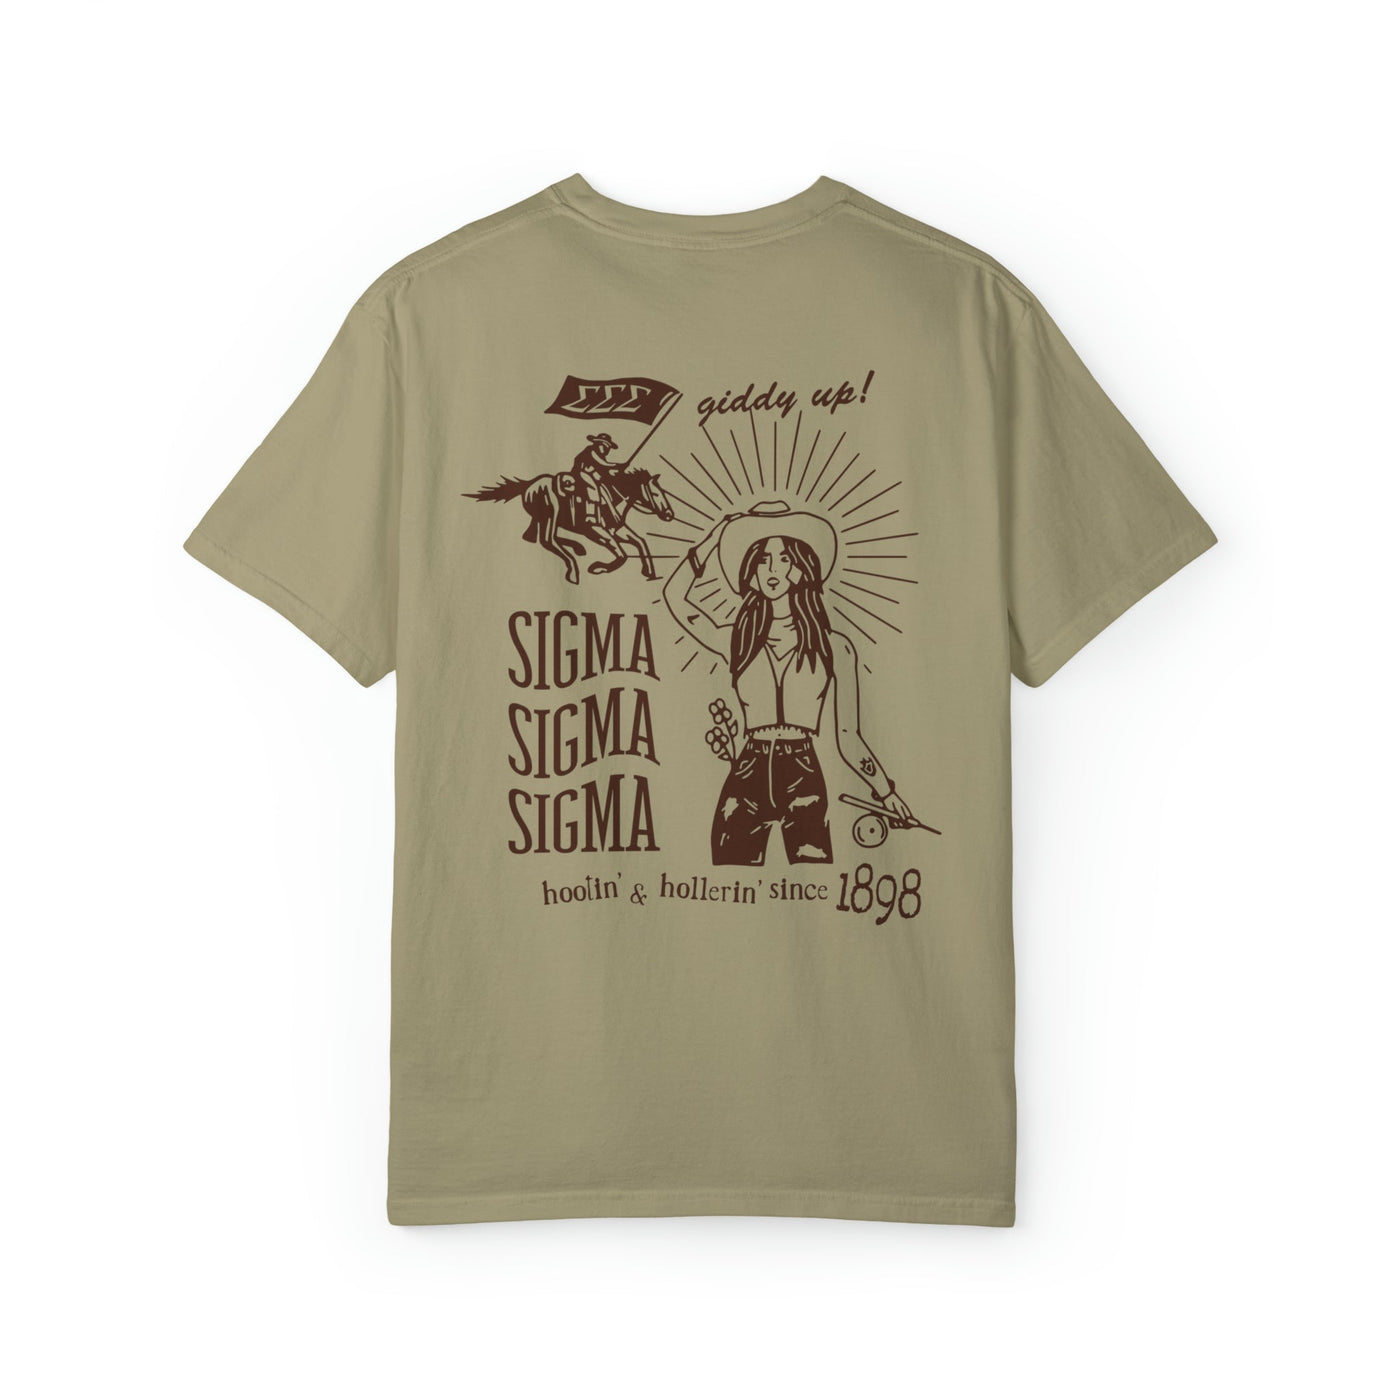 Sigma Sigma Sigma Country Western Sorority T-shirt